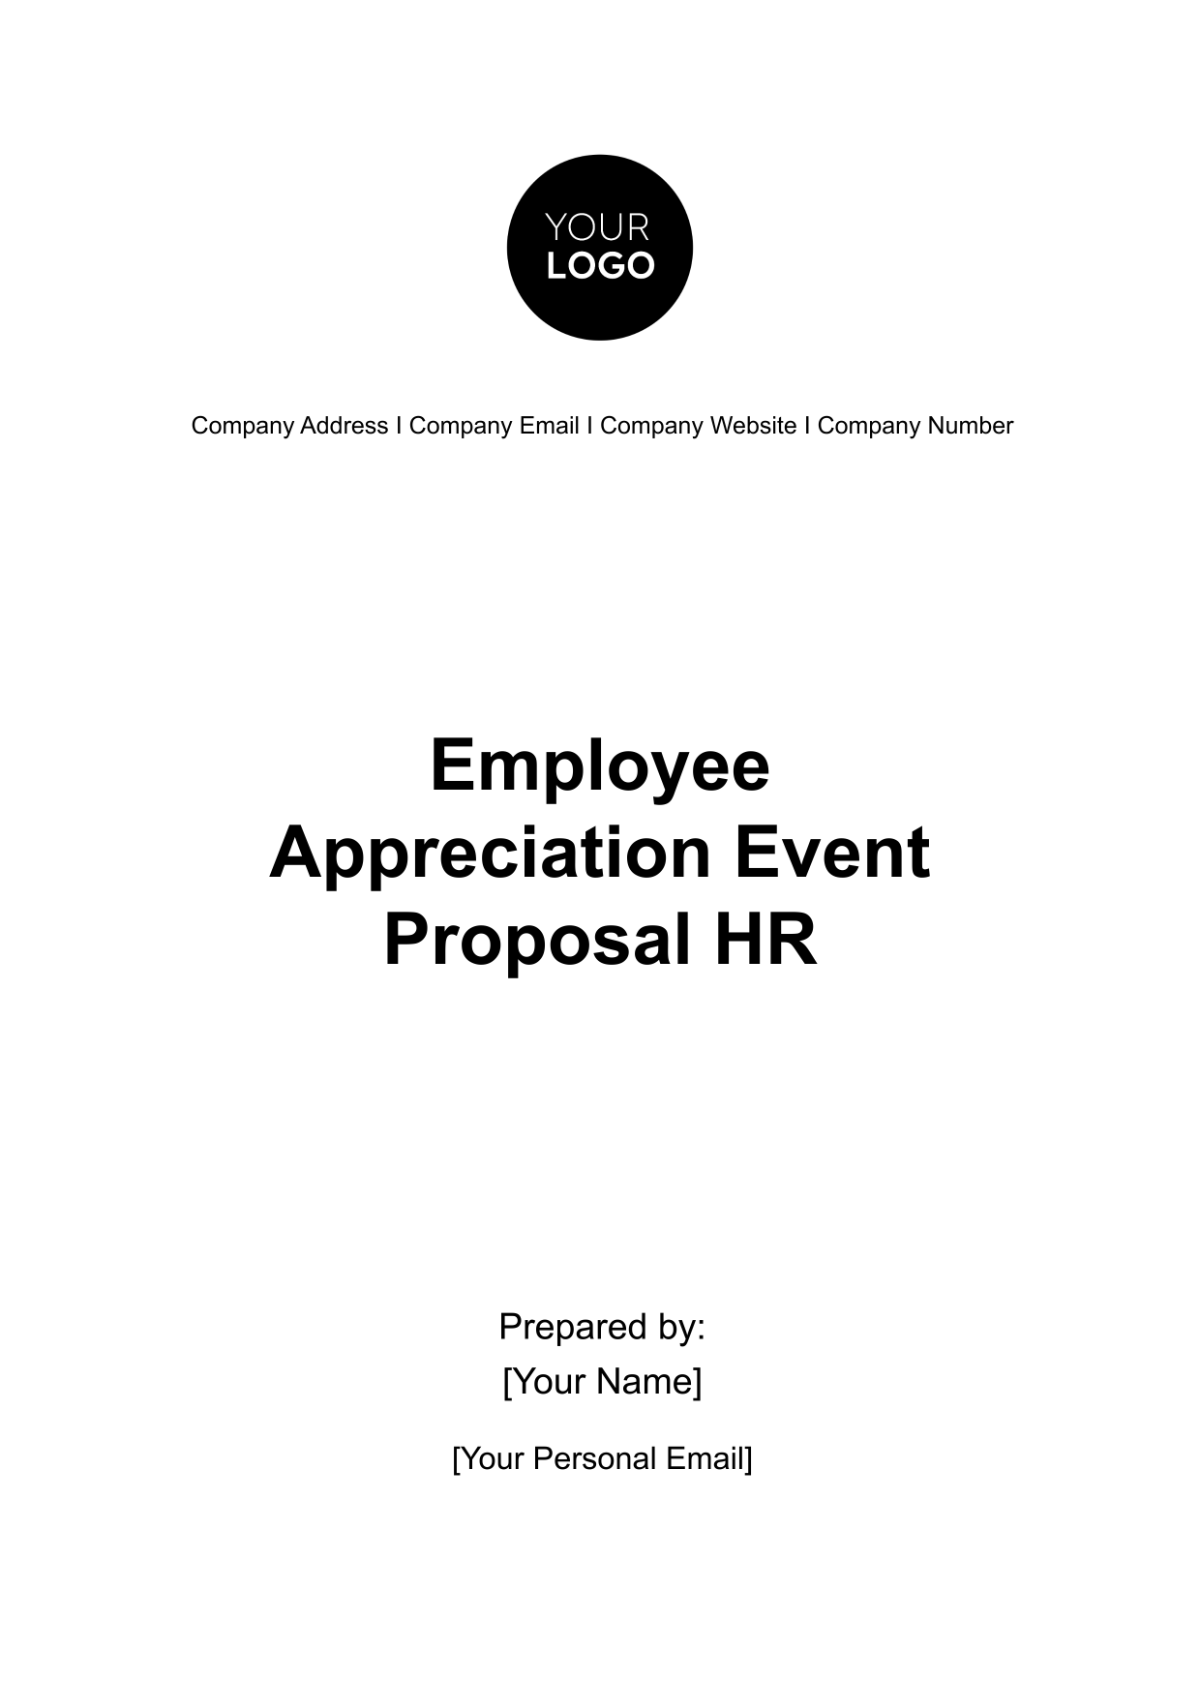 Employee Appreciation Event Proposal HR Template